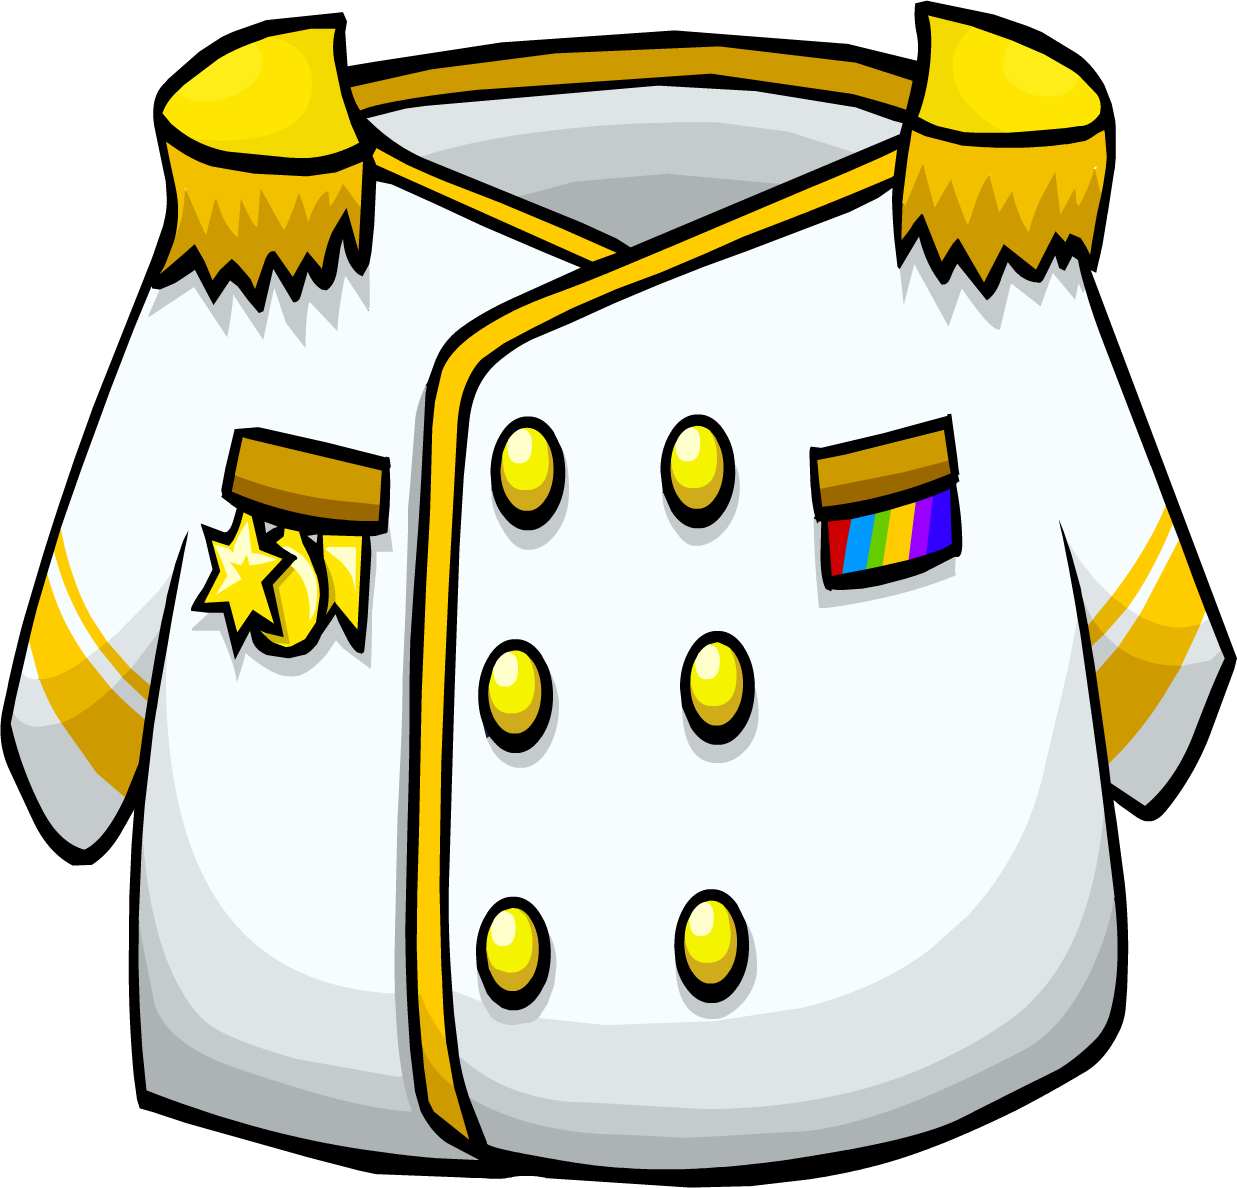 White Admiral Jacket - Club Penguin Admiral Jacket (1237x1188)